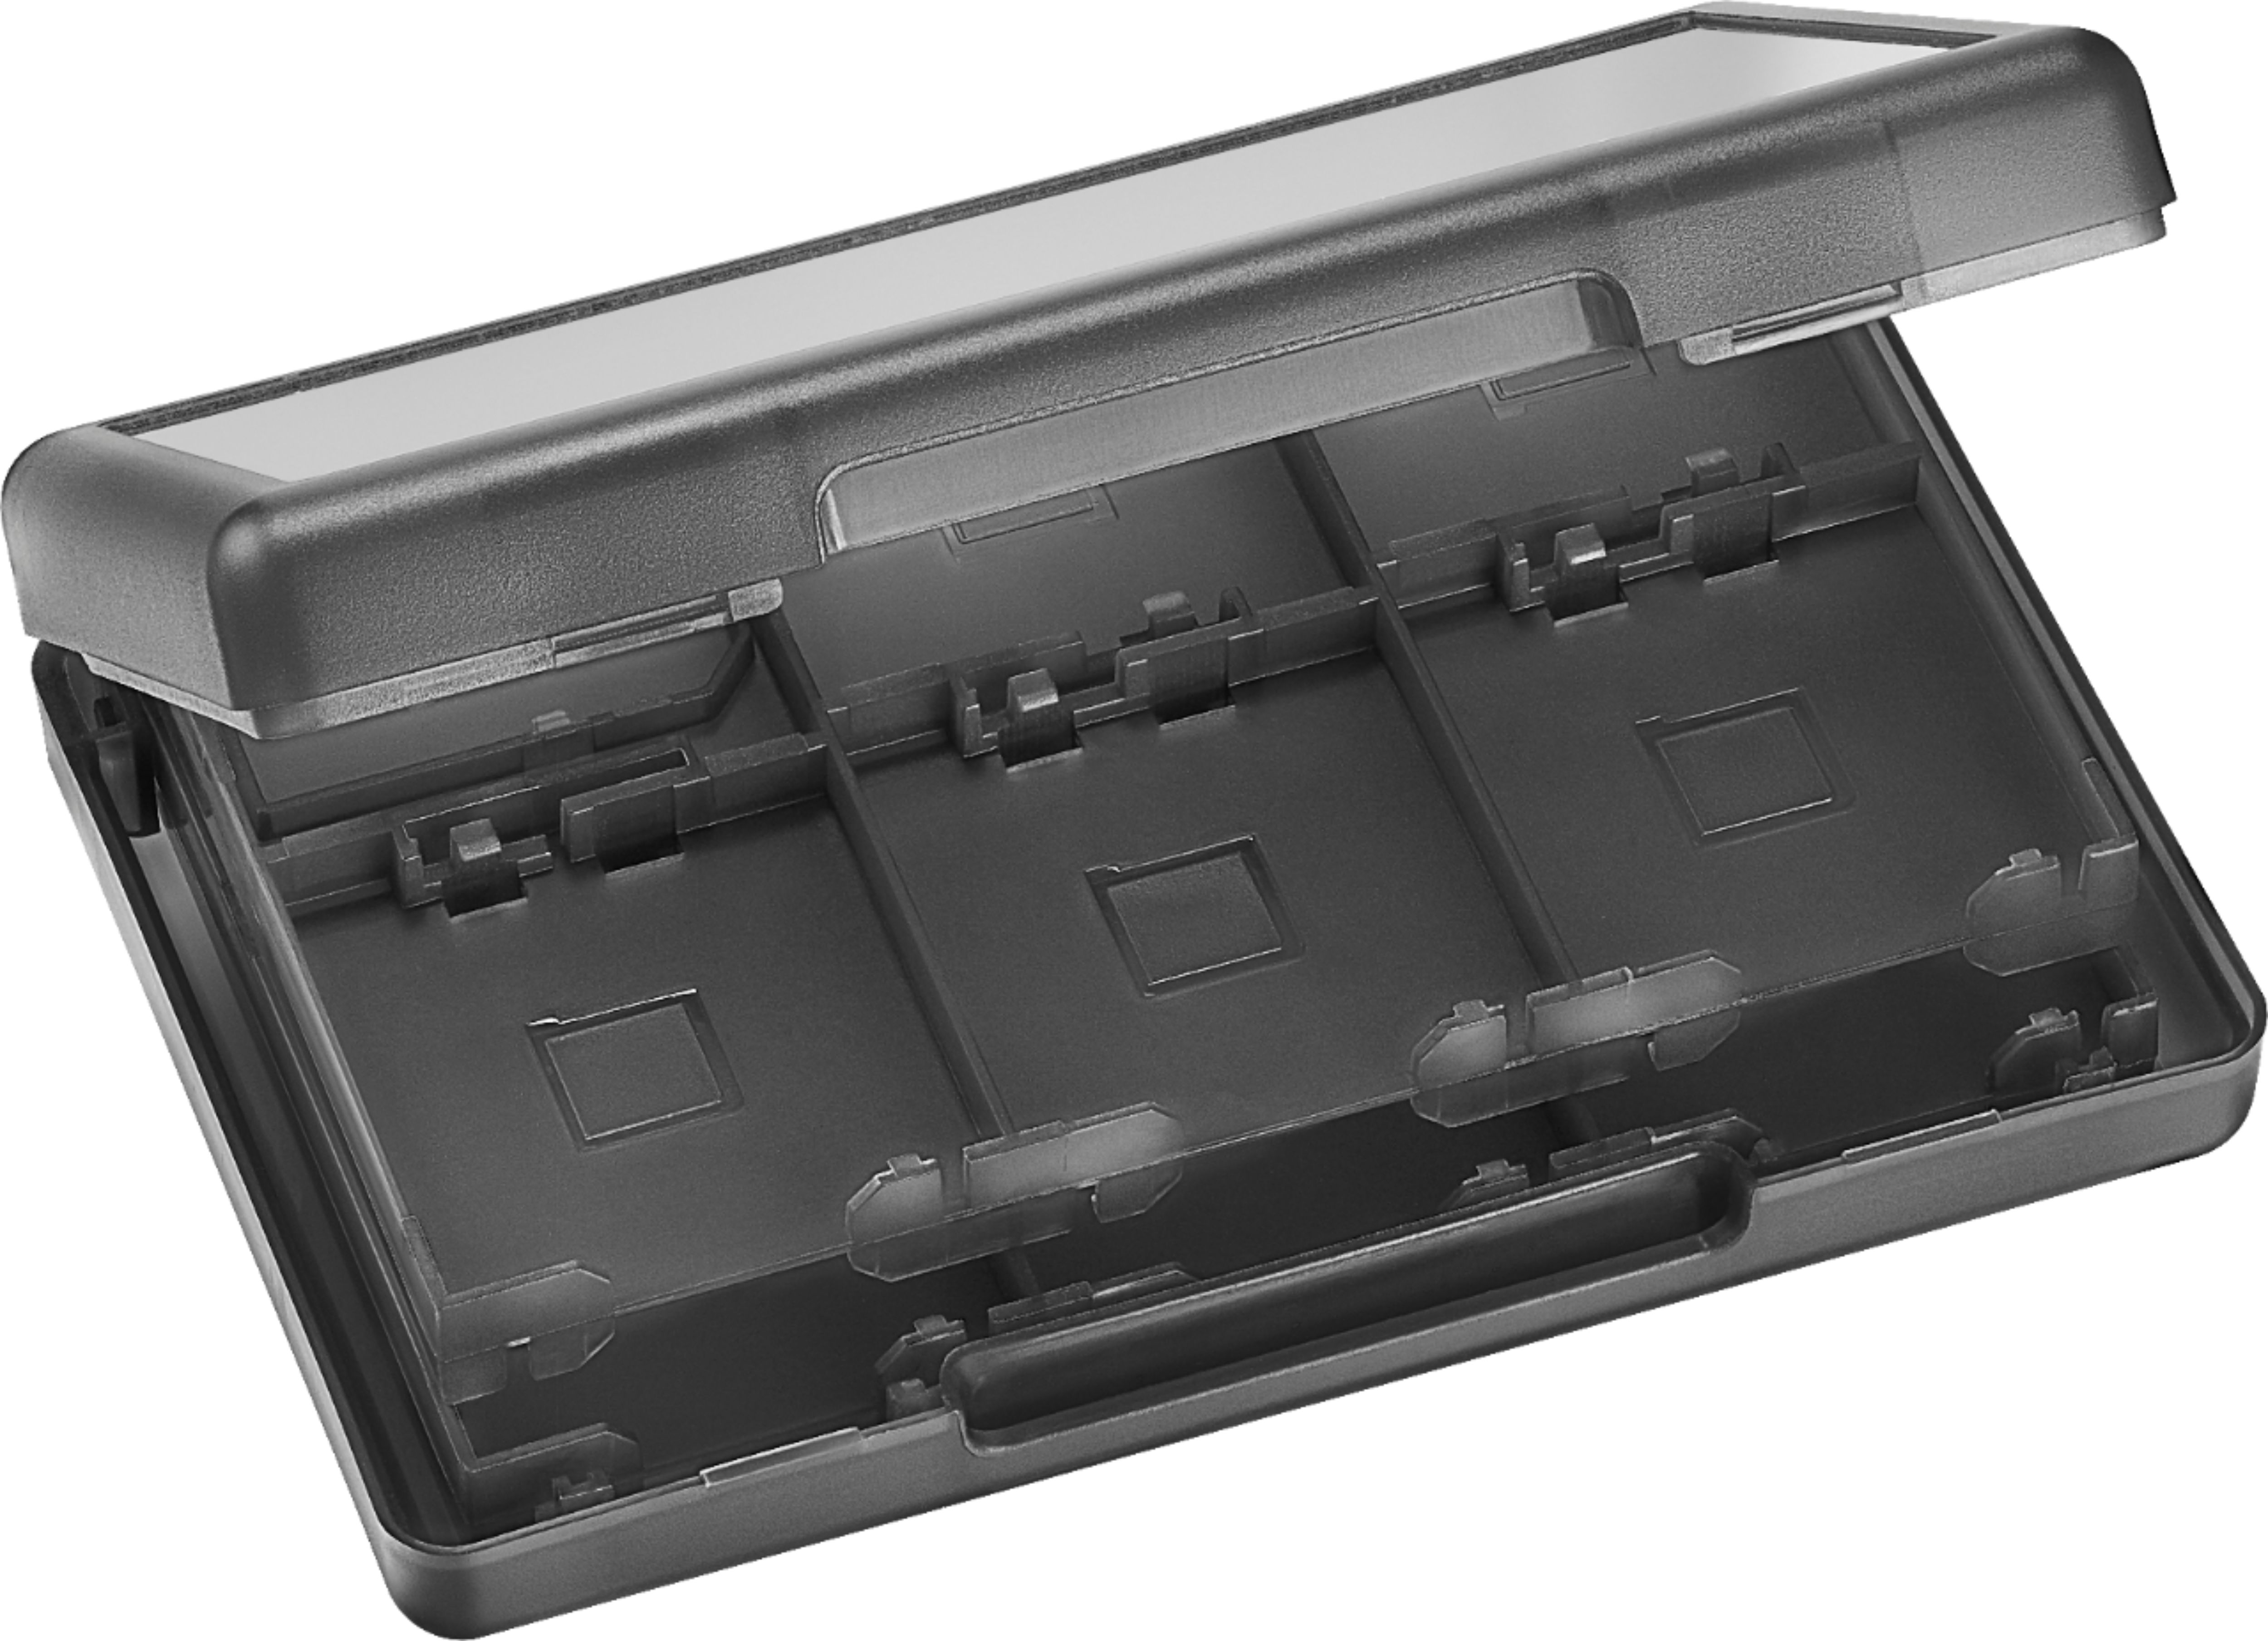 3ds cartridge case